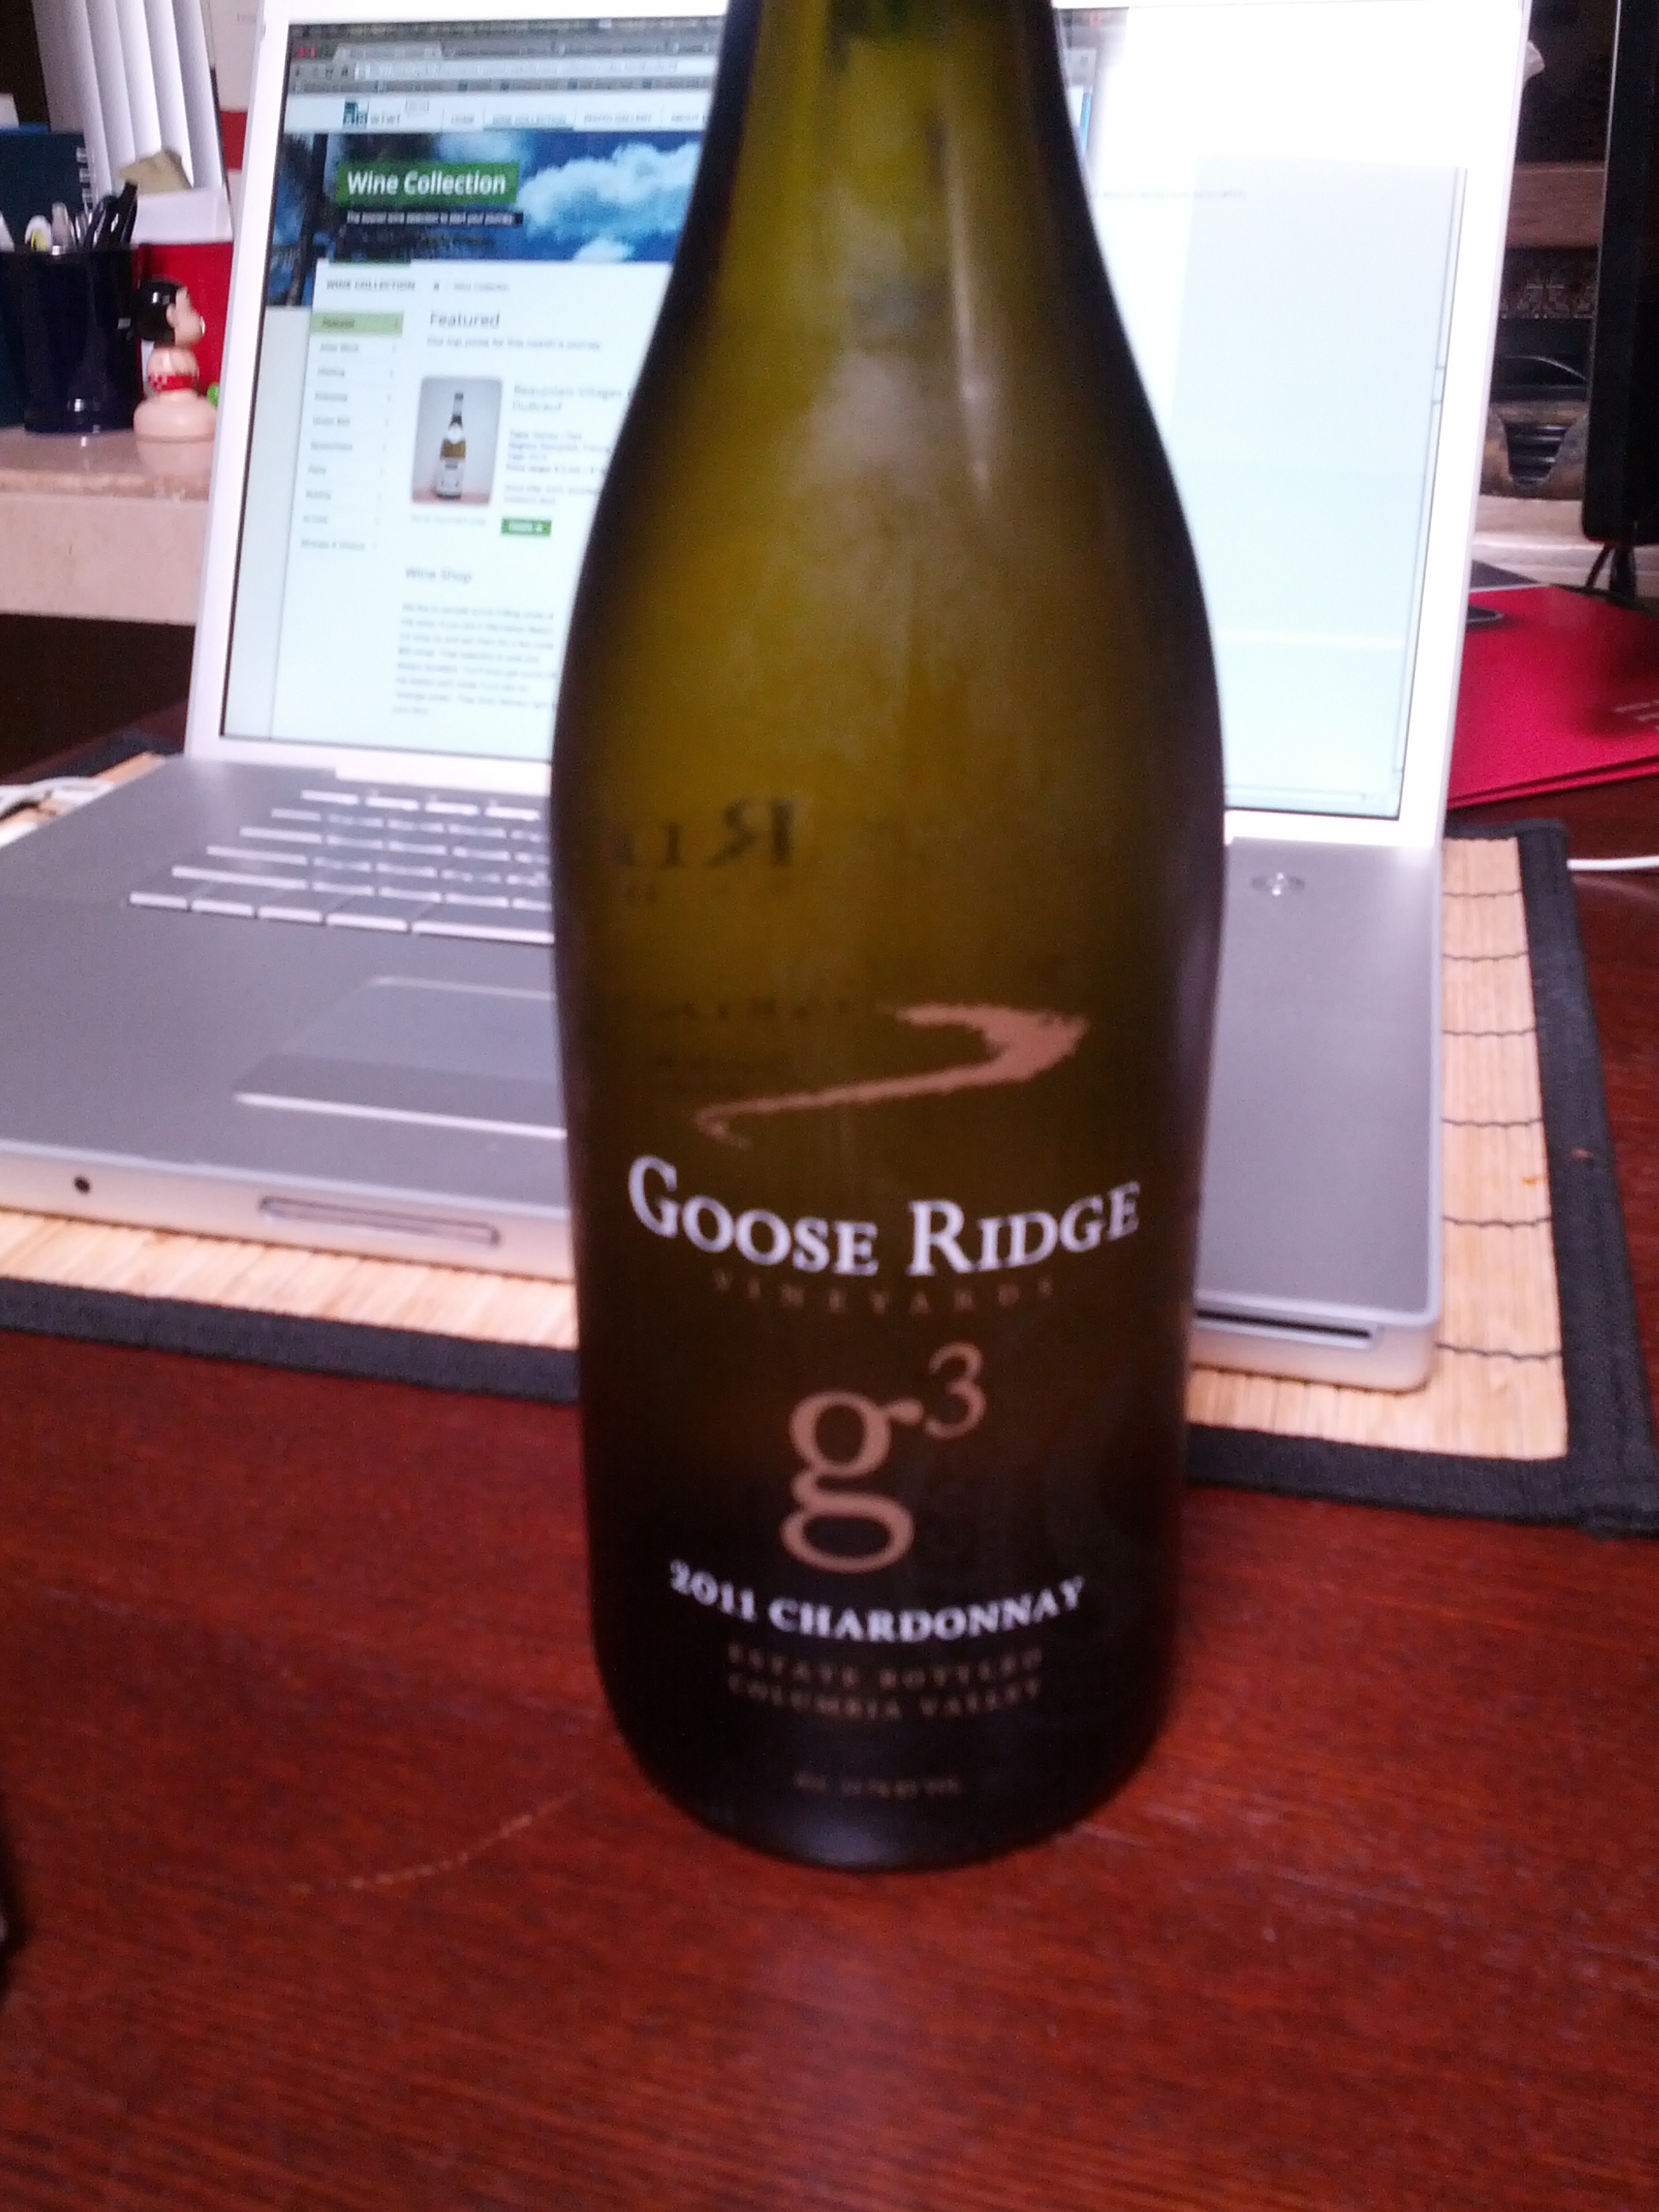 Goose Ridge Vinyards g3 2011 Chardonnay